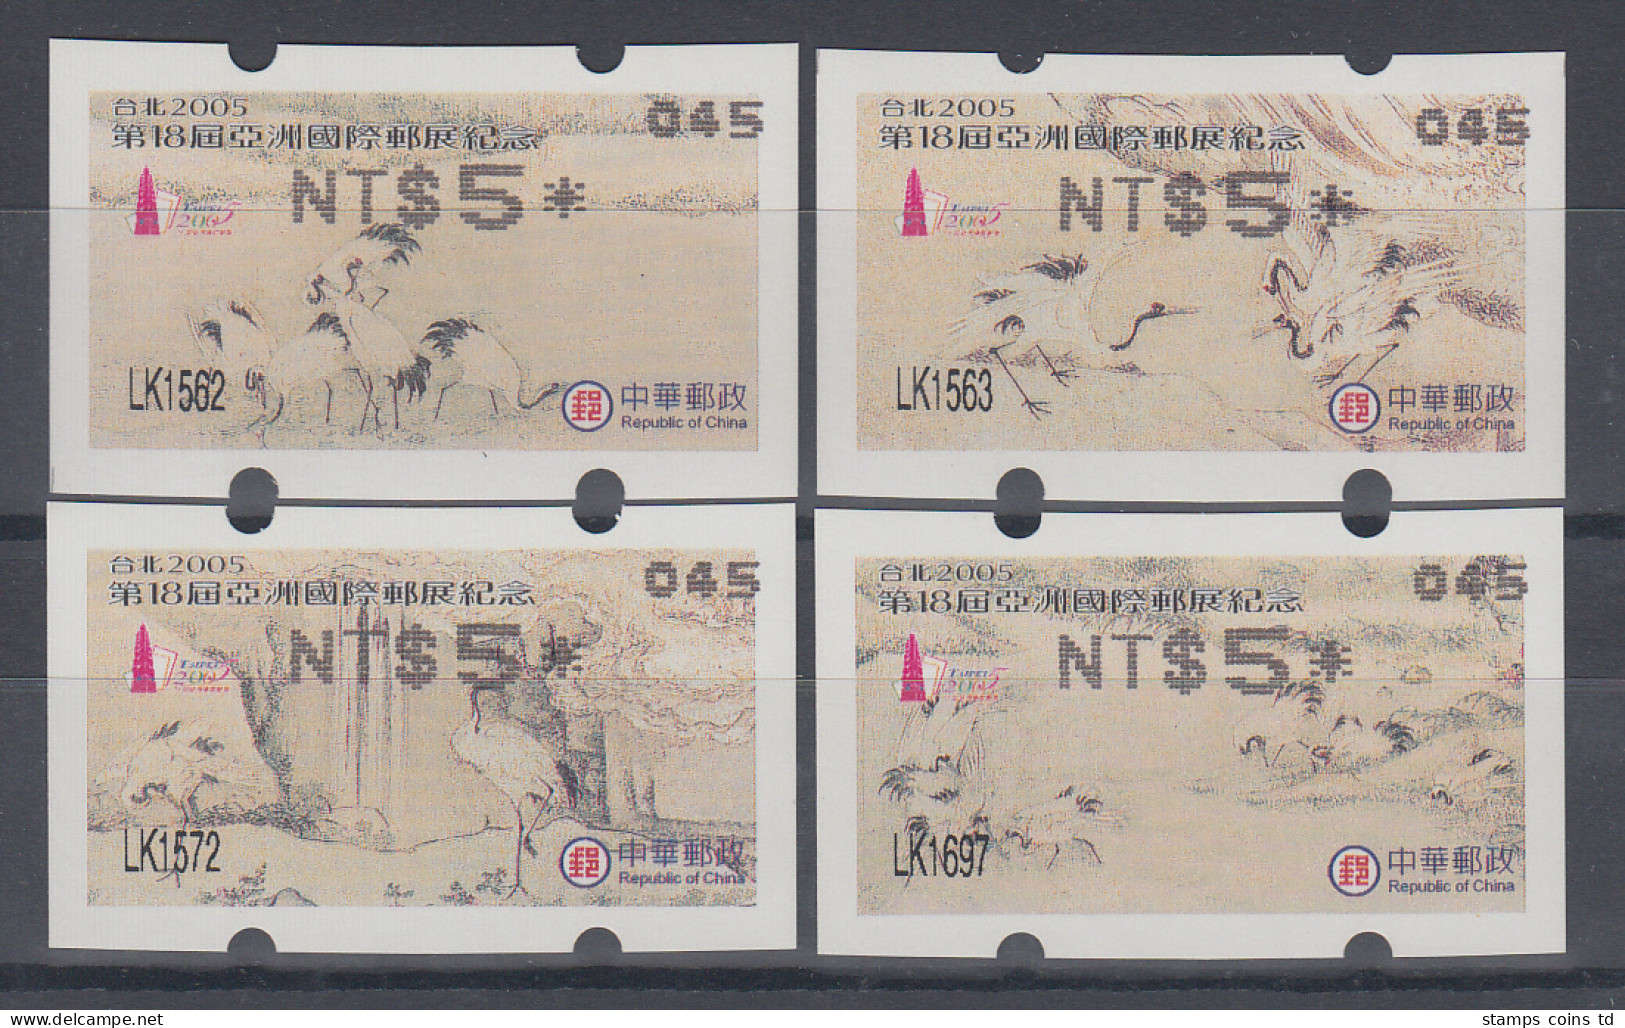 China Taiwan Nagler-ATM Kraniche, Stern 8-strahlig Gerade, Mi.-Nr. 7.3e - 10.3e - Automatenmarken